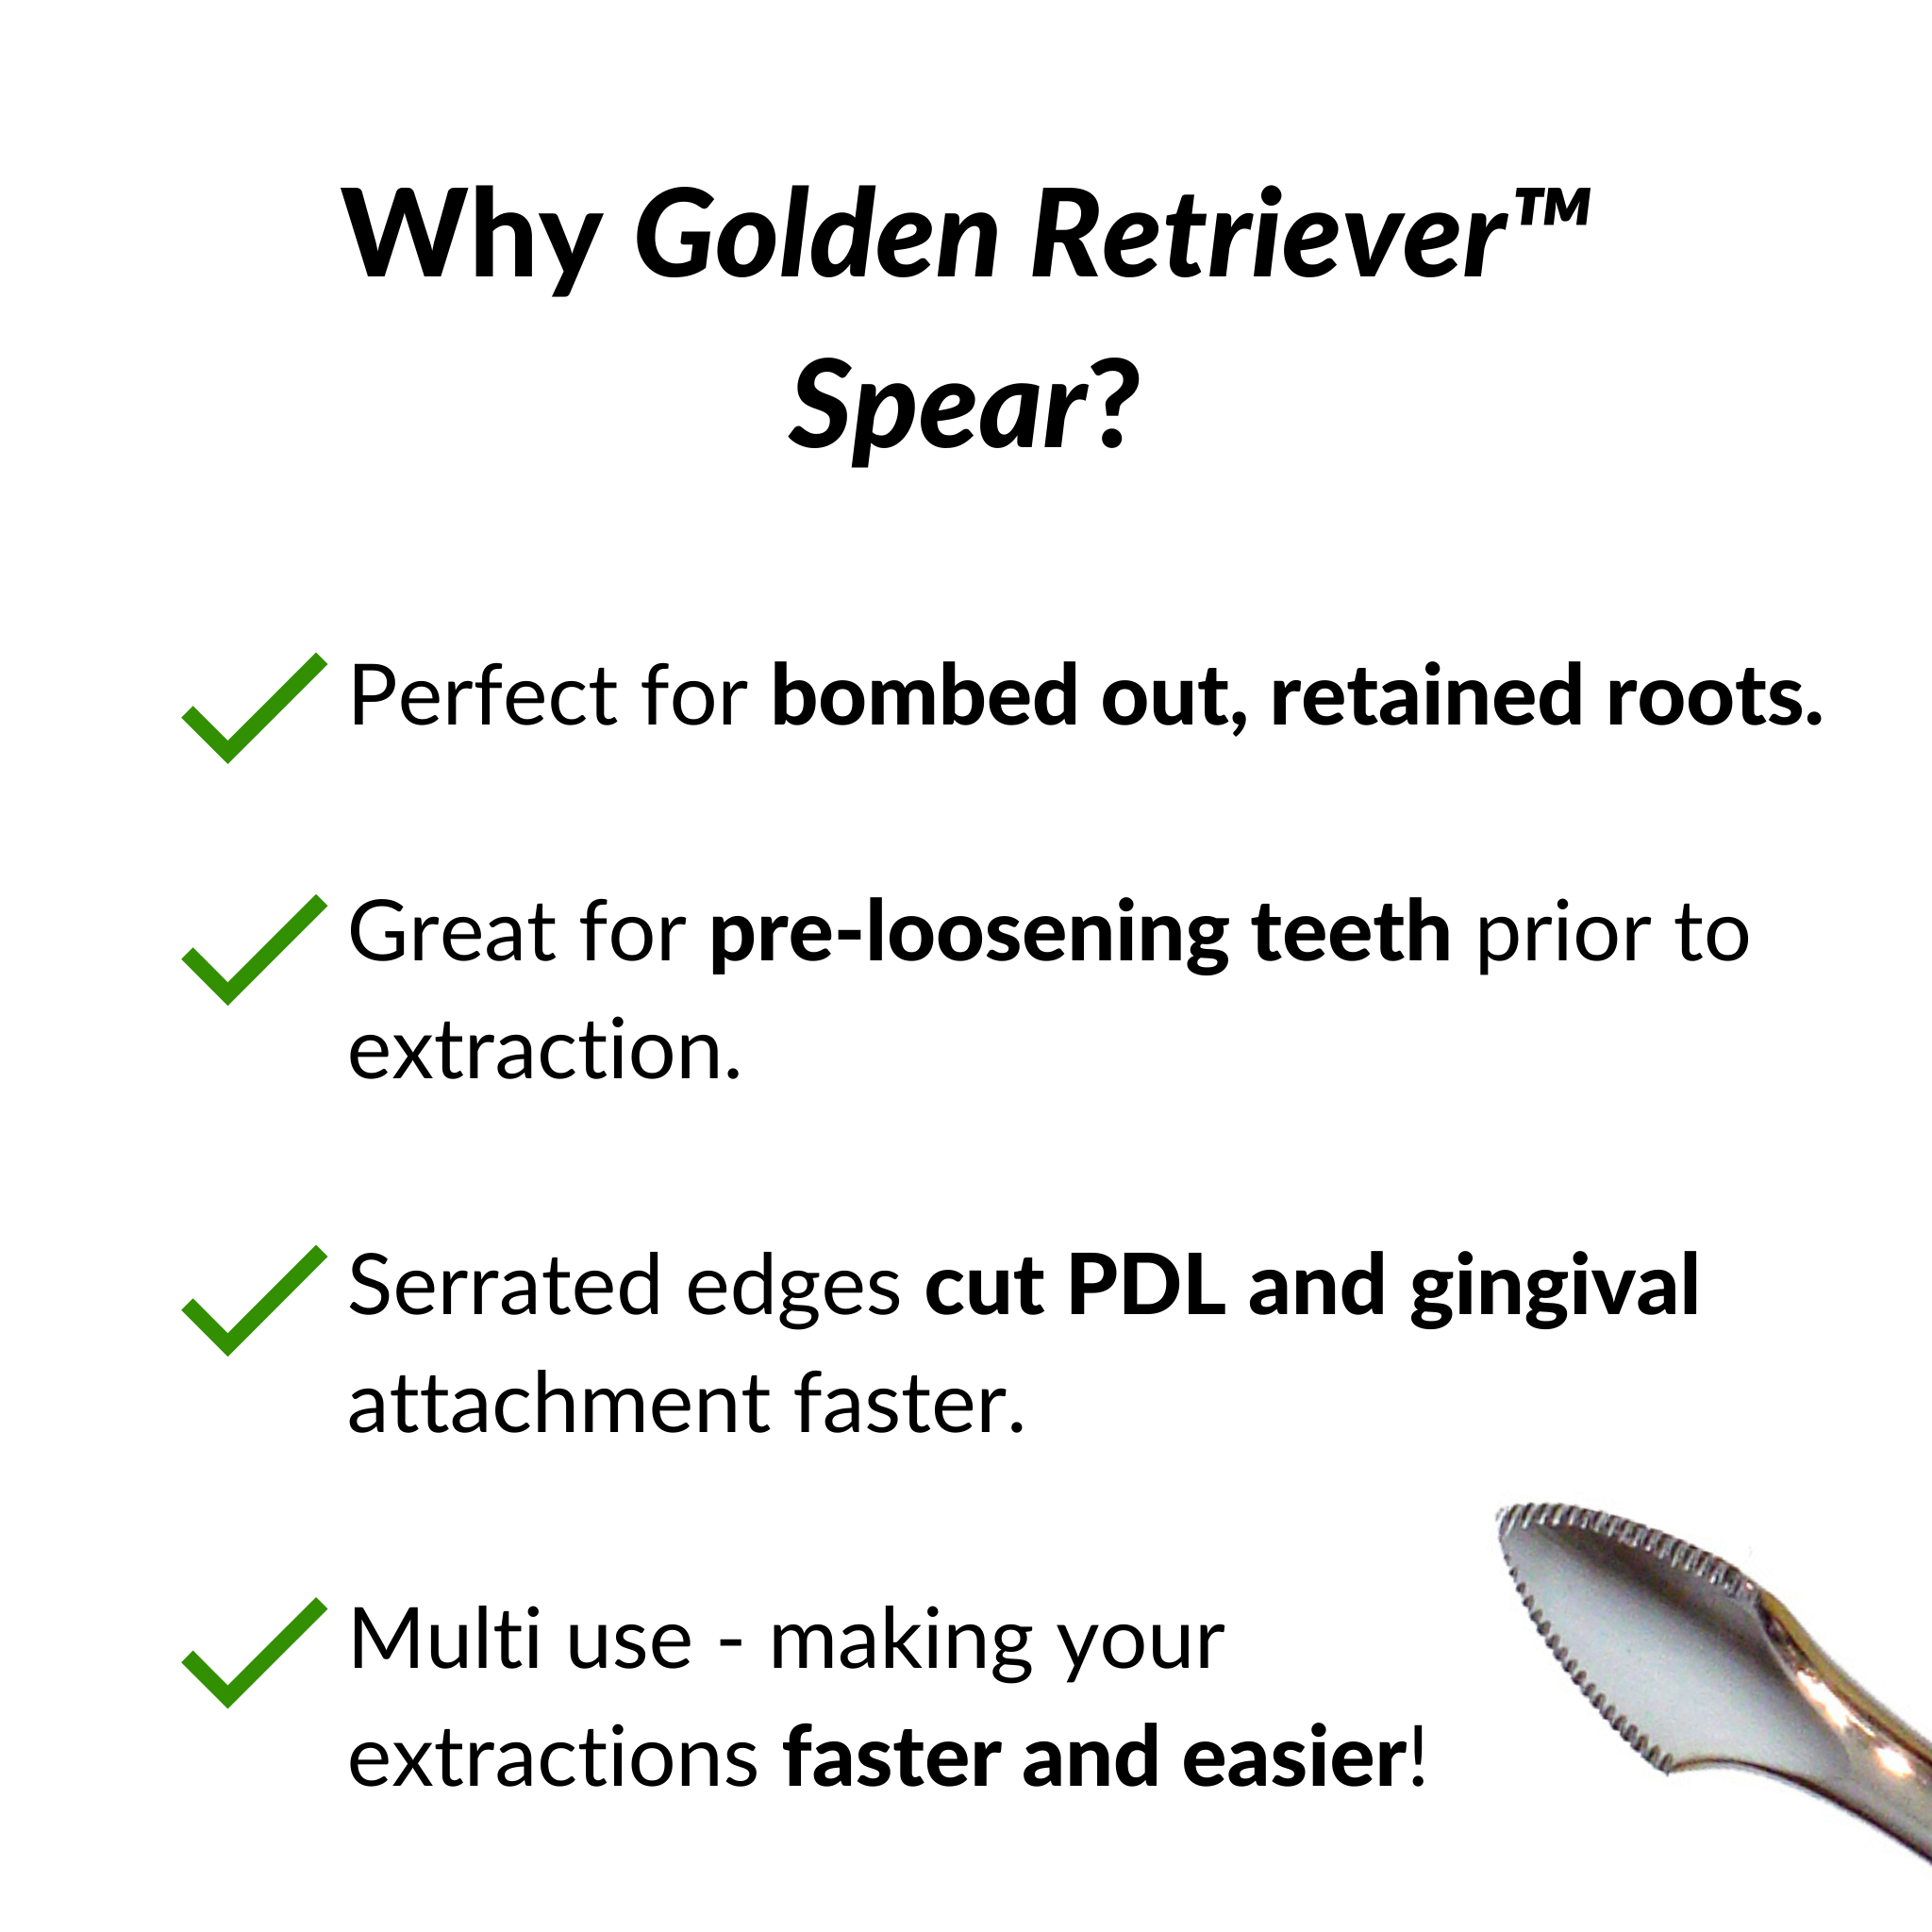 Golden Retriever™ Spear